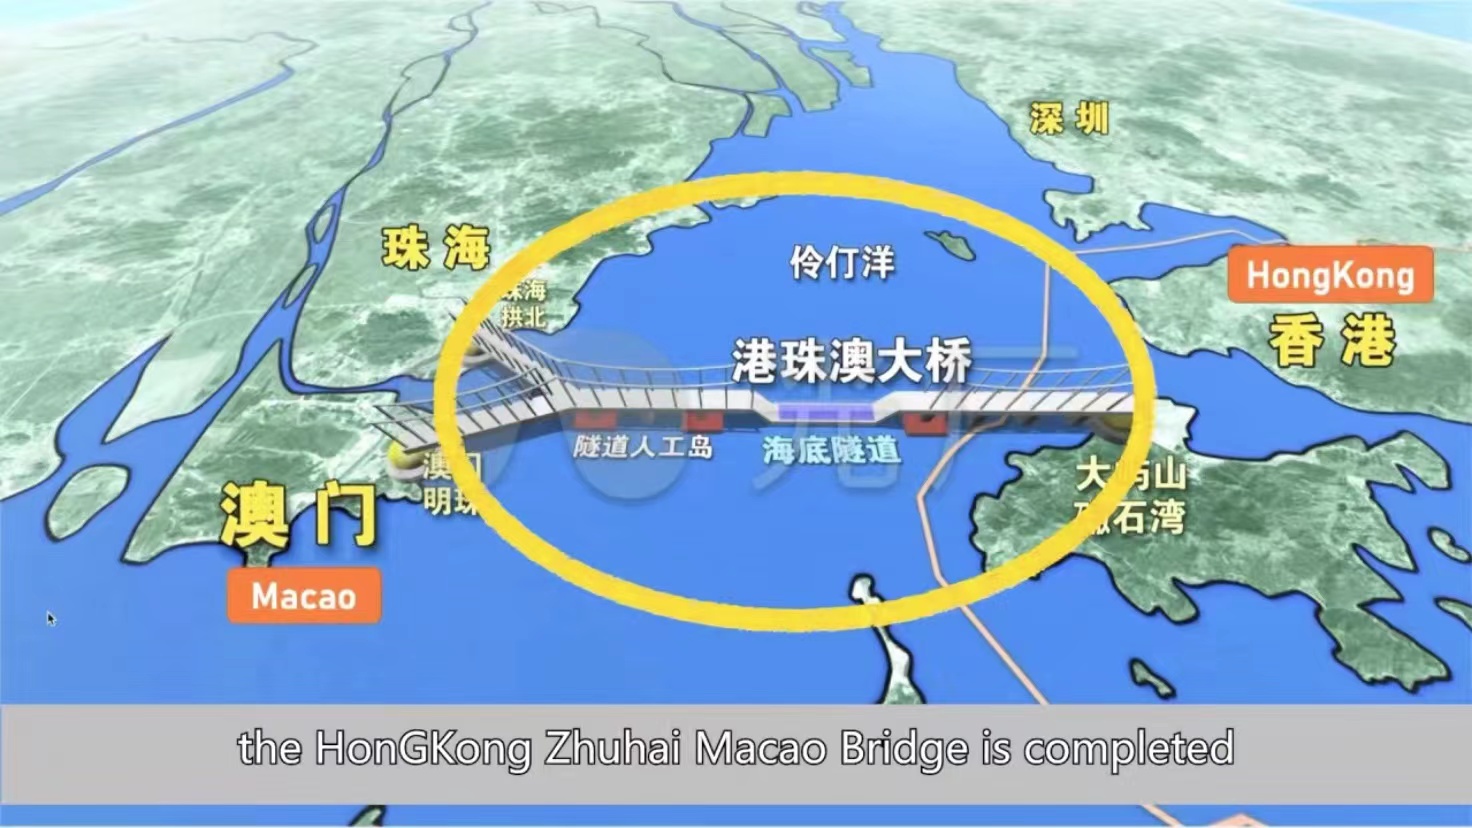 Take the high-speed rail to see China